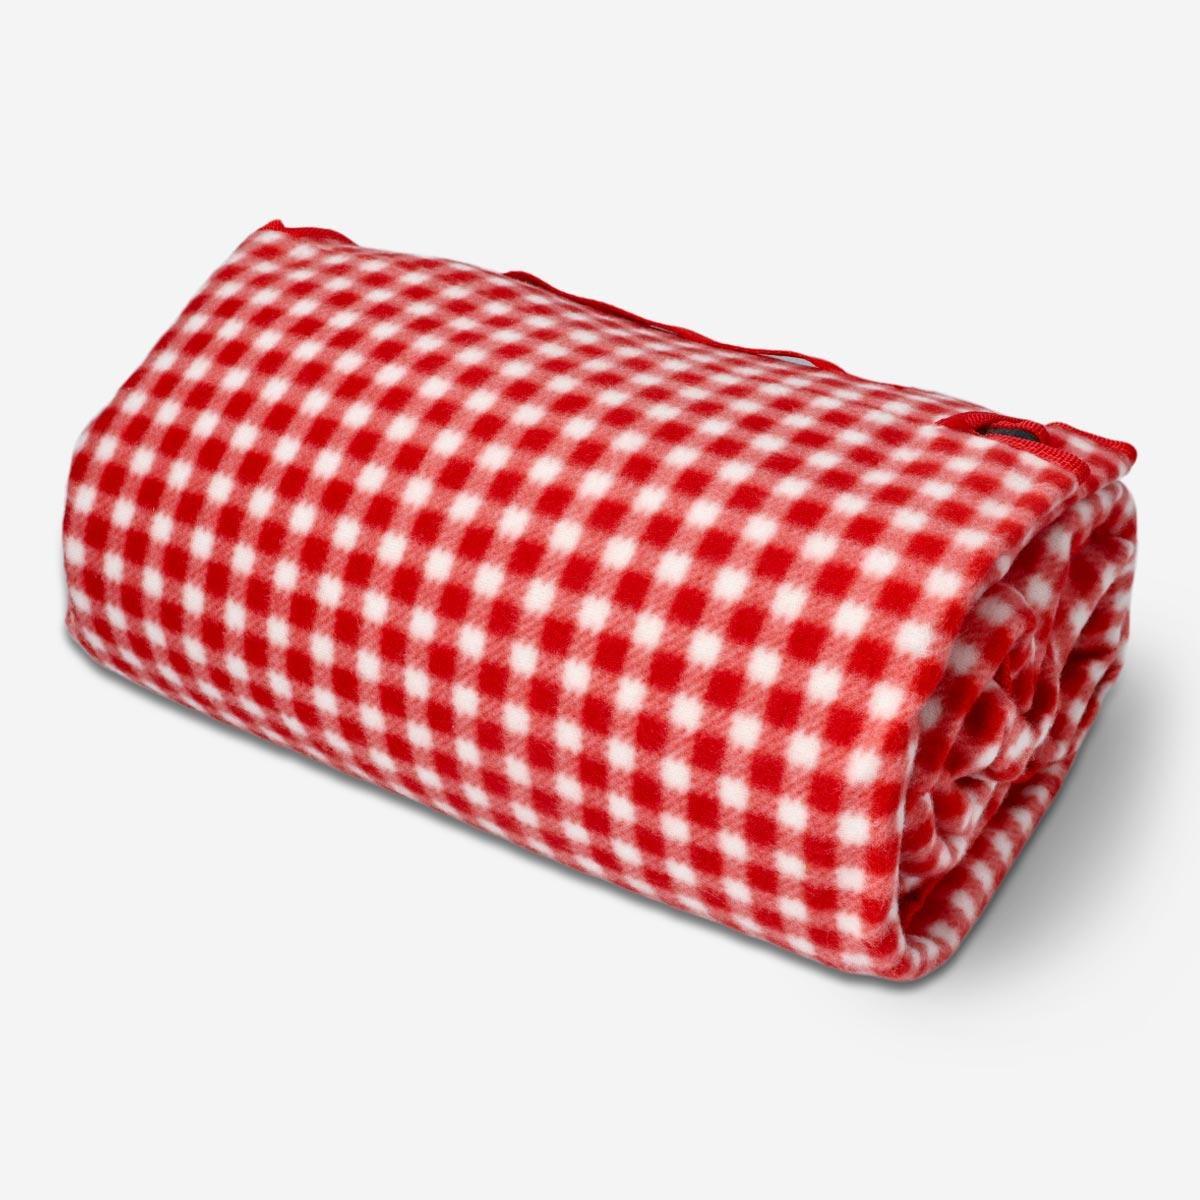 Red picnic blanket